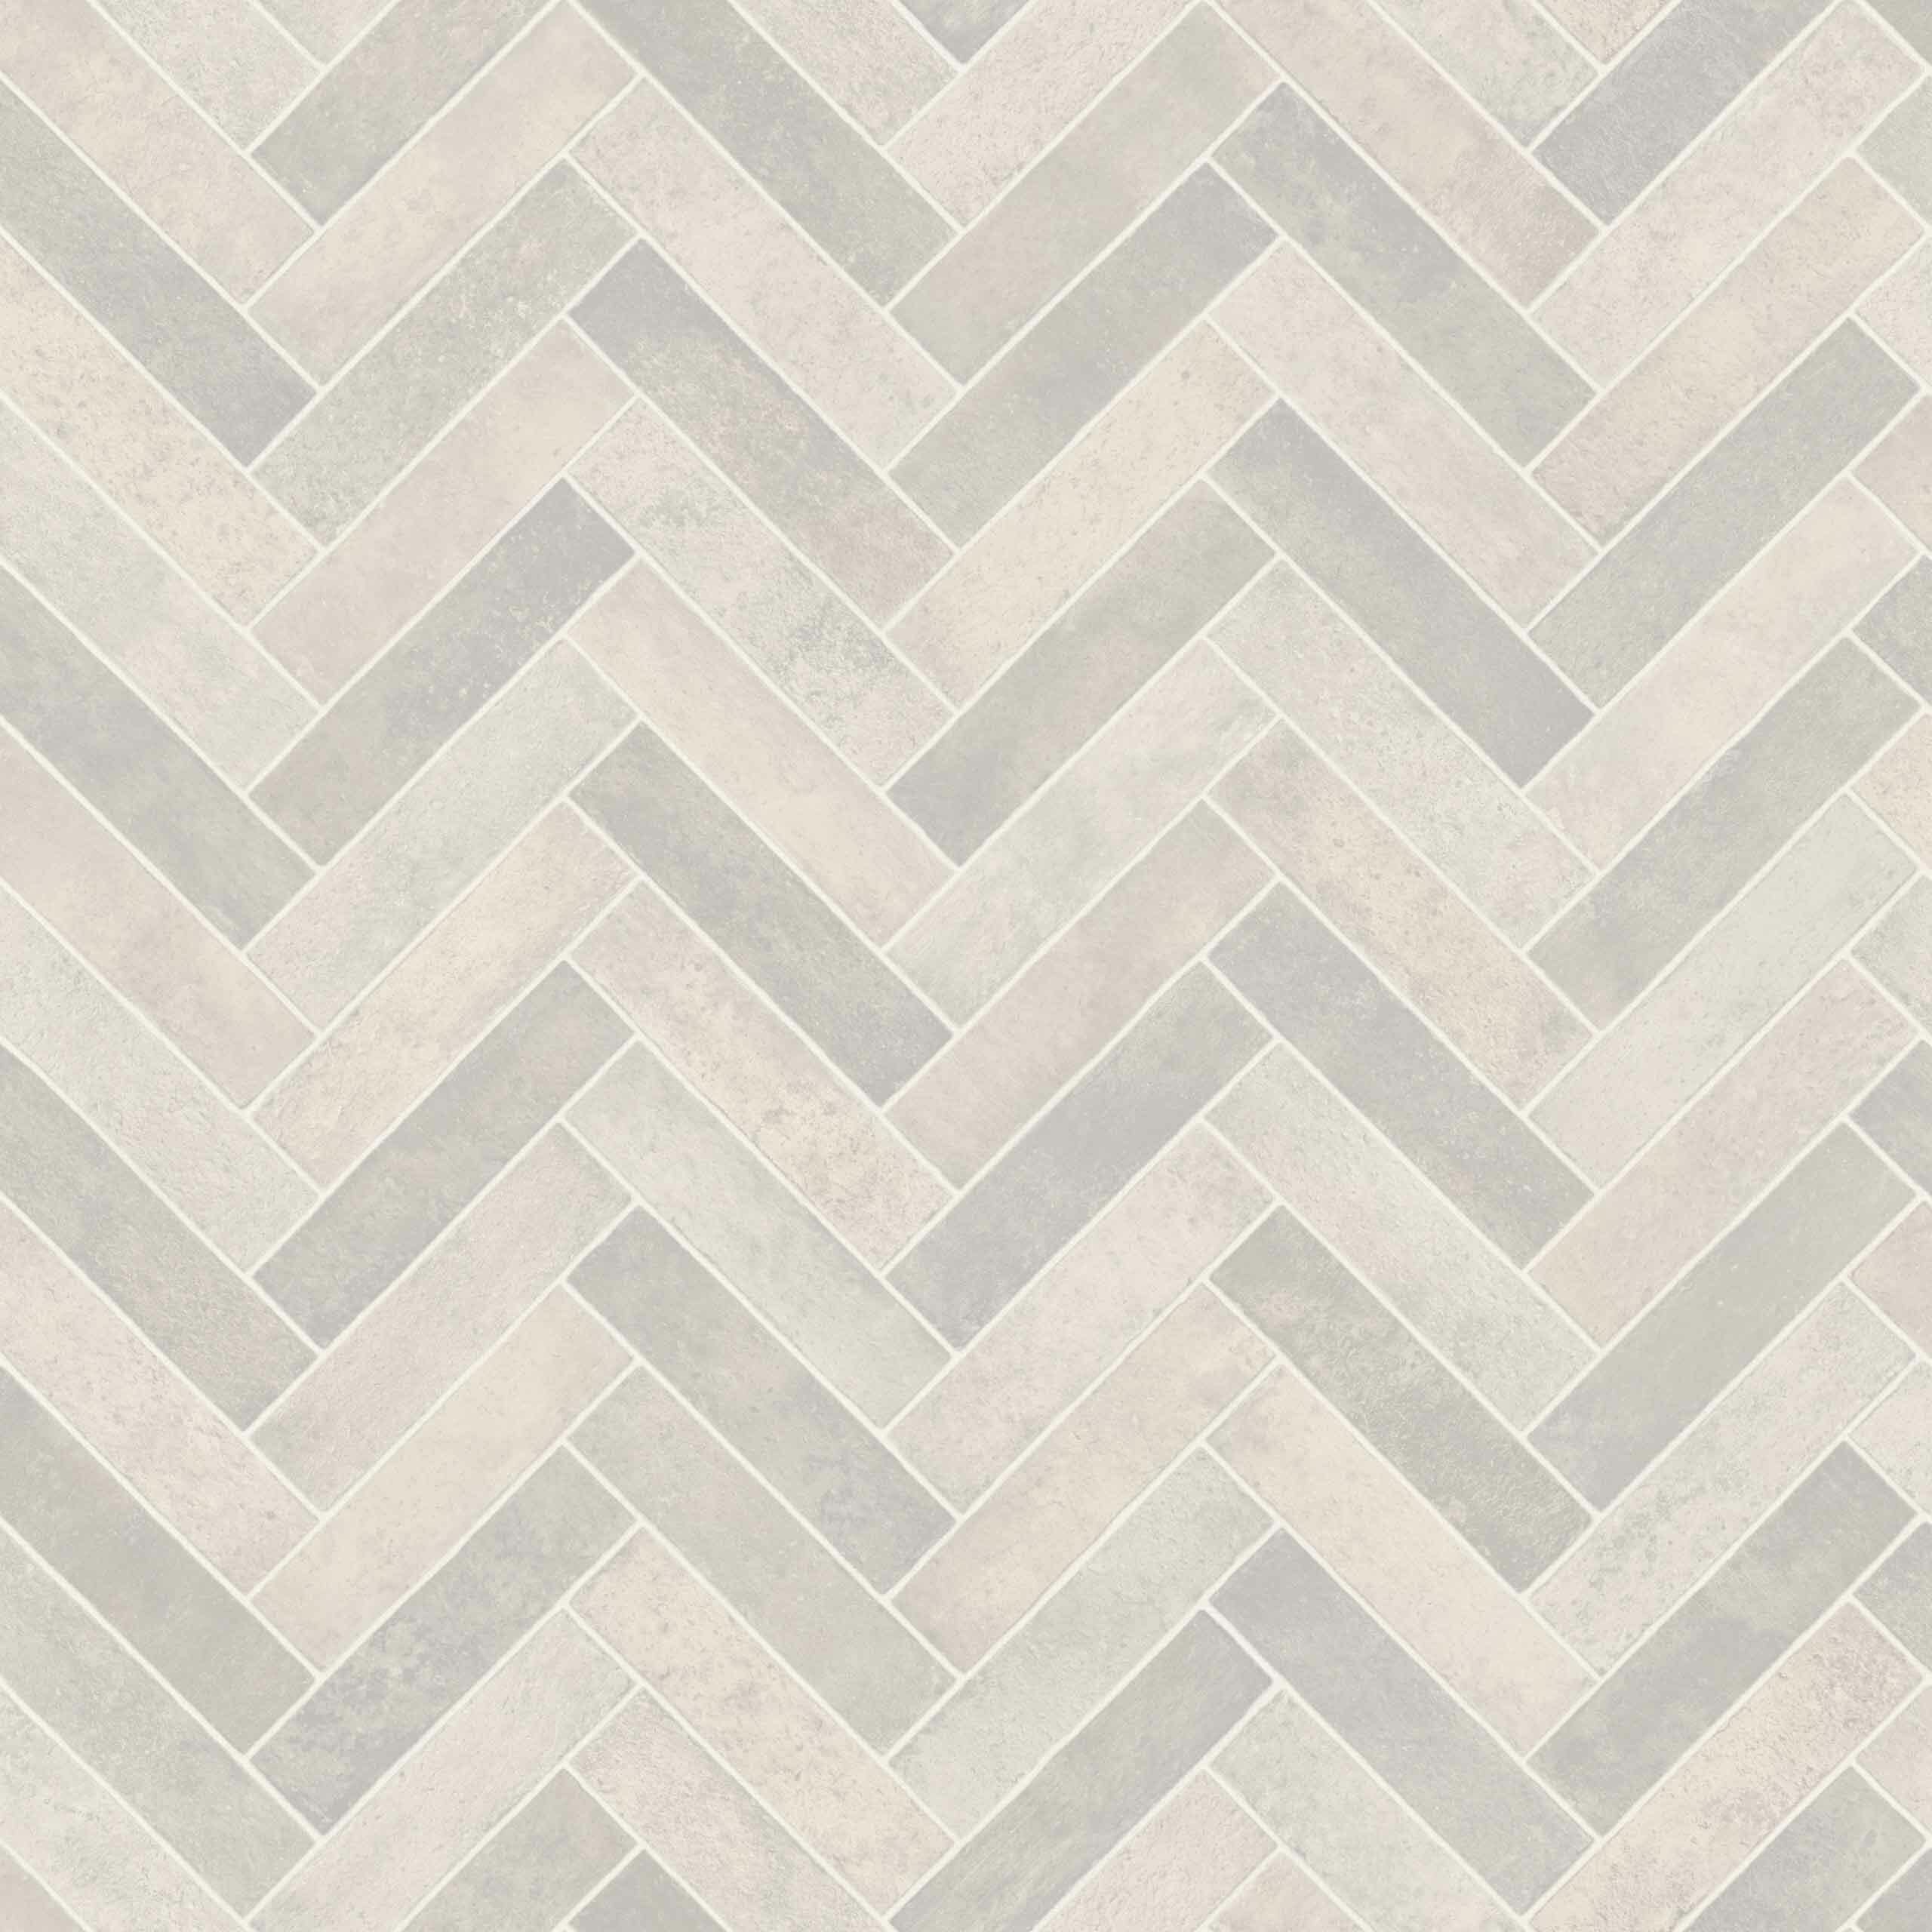 BONITA BF103 Mosaic Herringbone pattern vinyl flooring